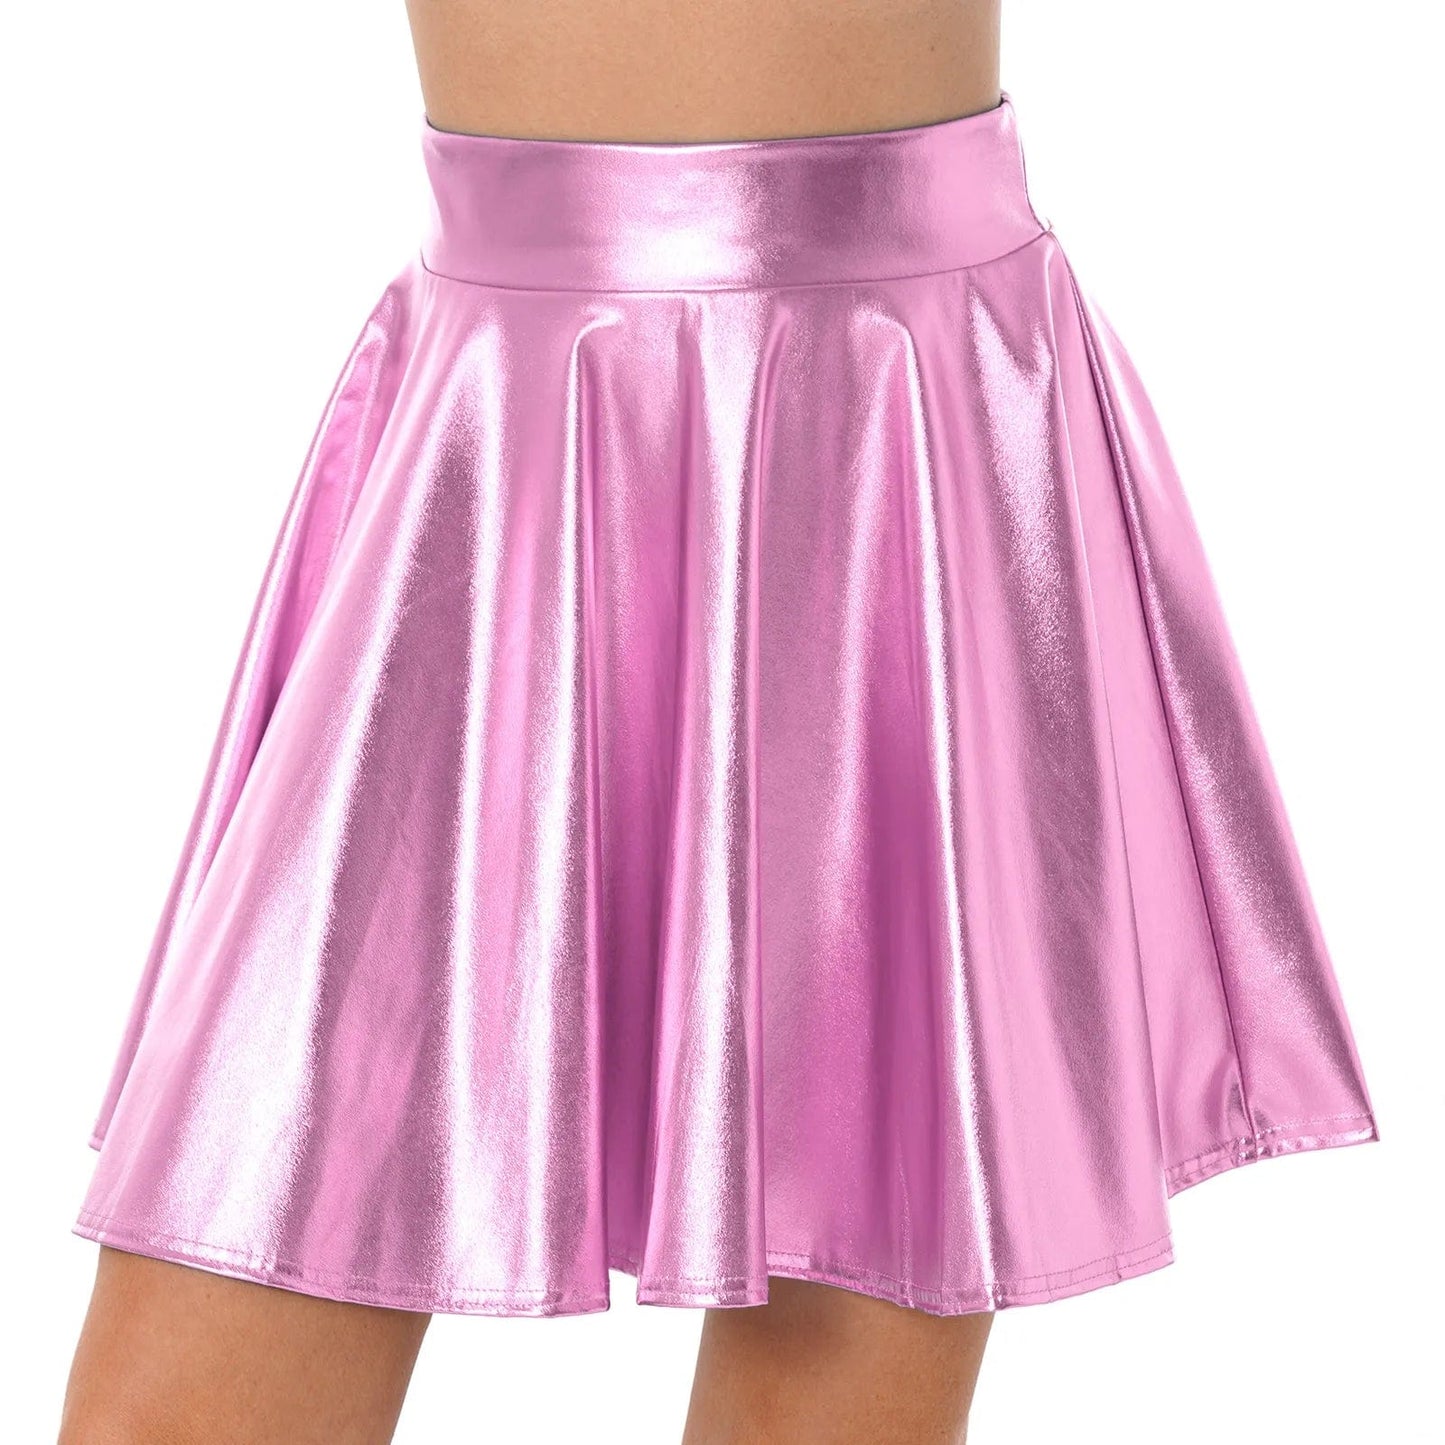 Kinky Cloth Pink B / S Metallic Shiny Camisole Skirt Sets